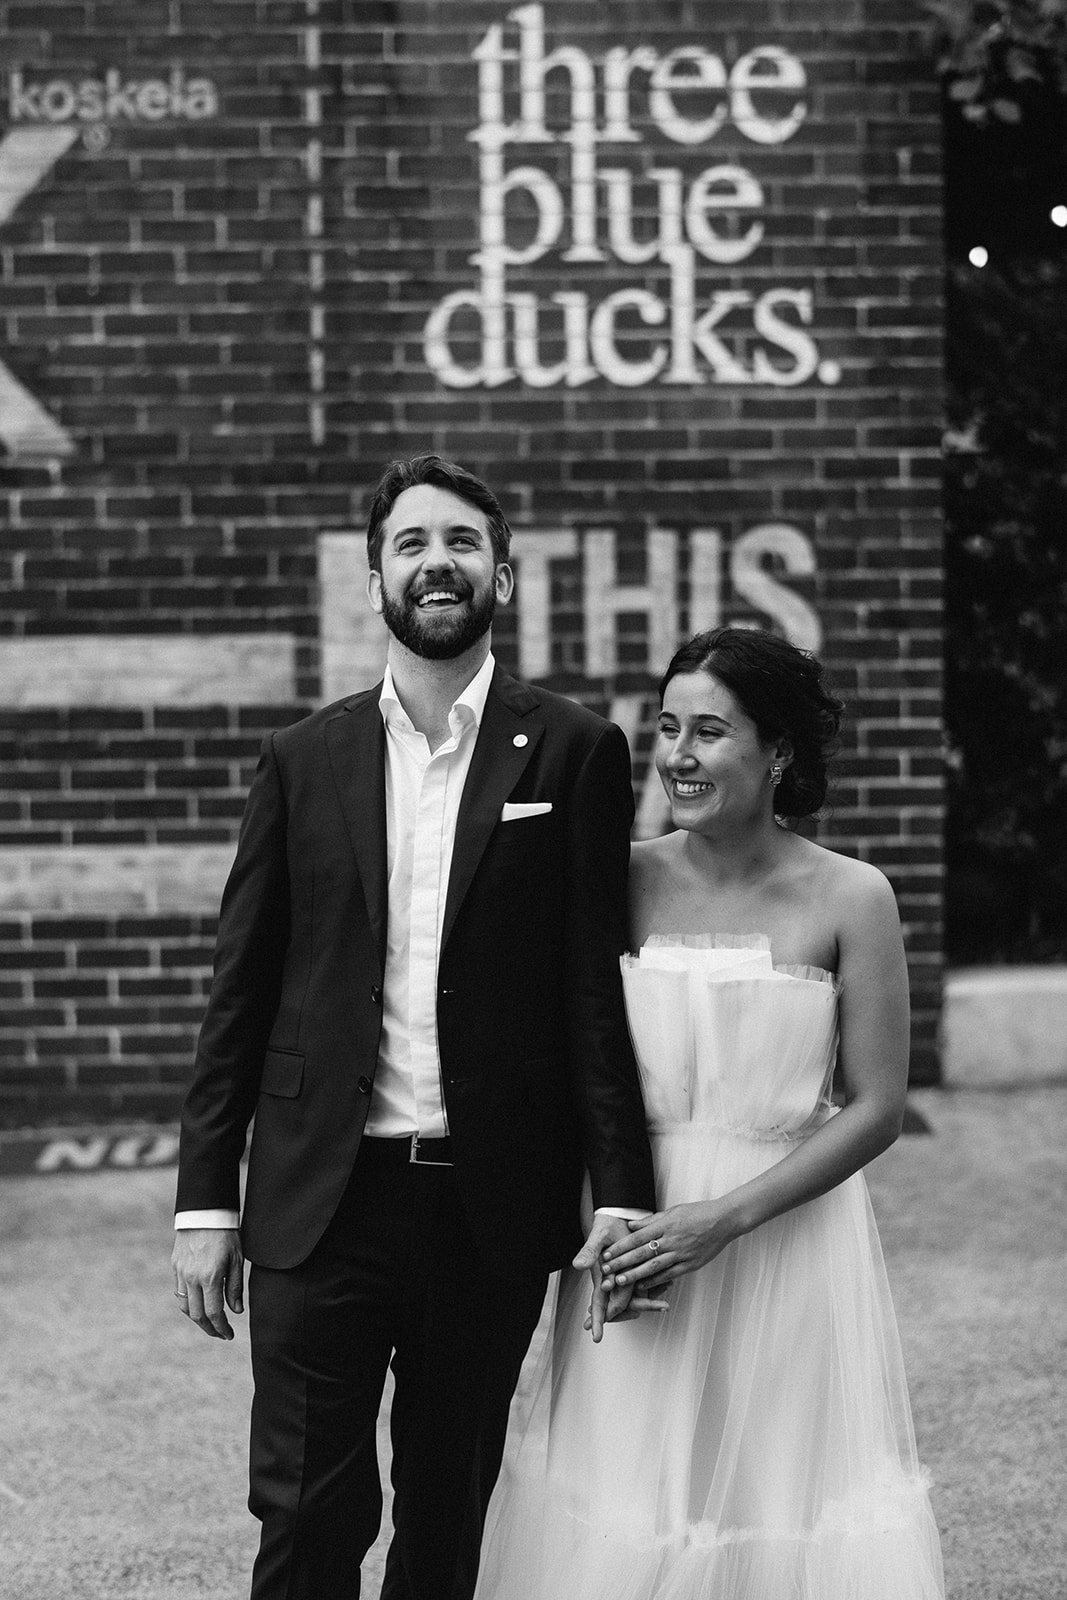 three blue ducks Sydney bride and groom portrait